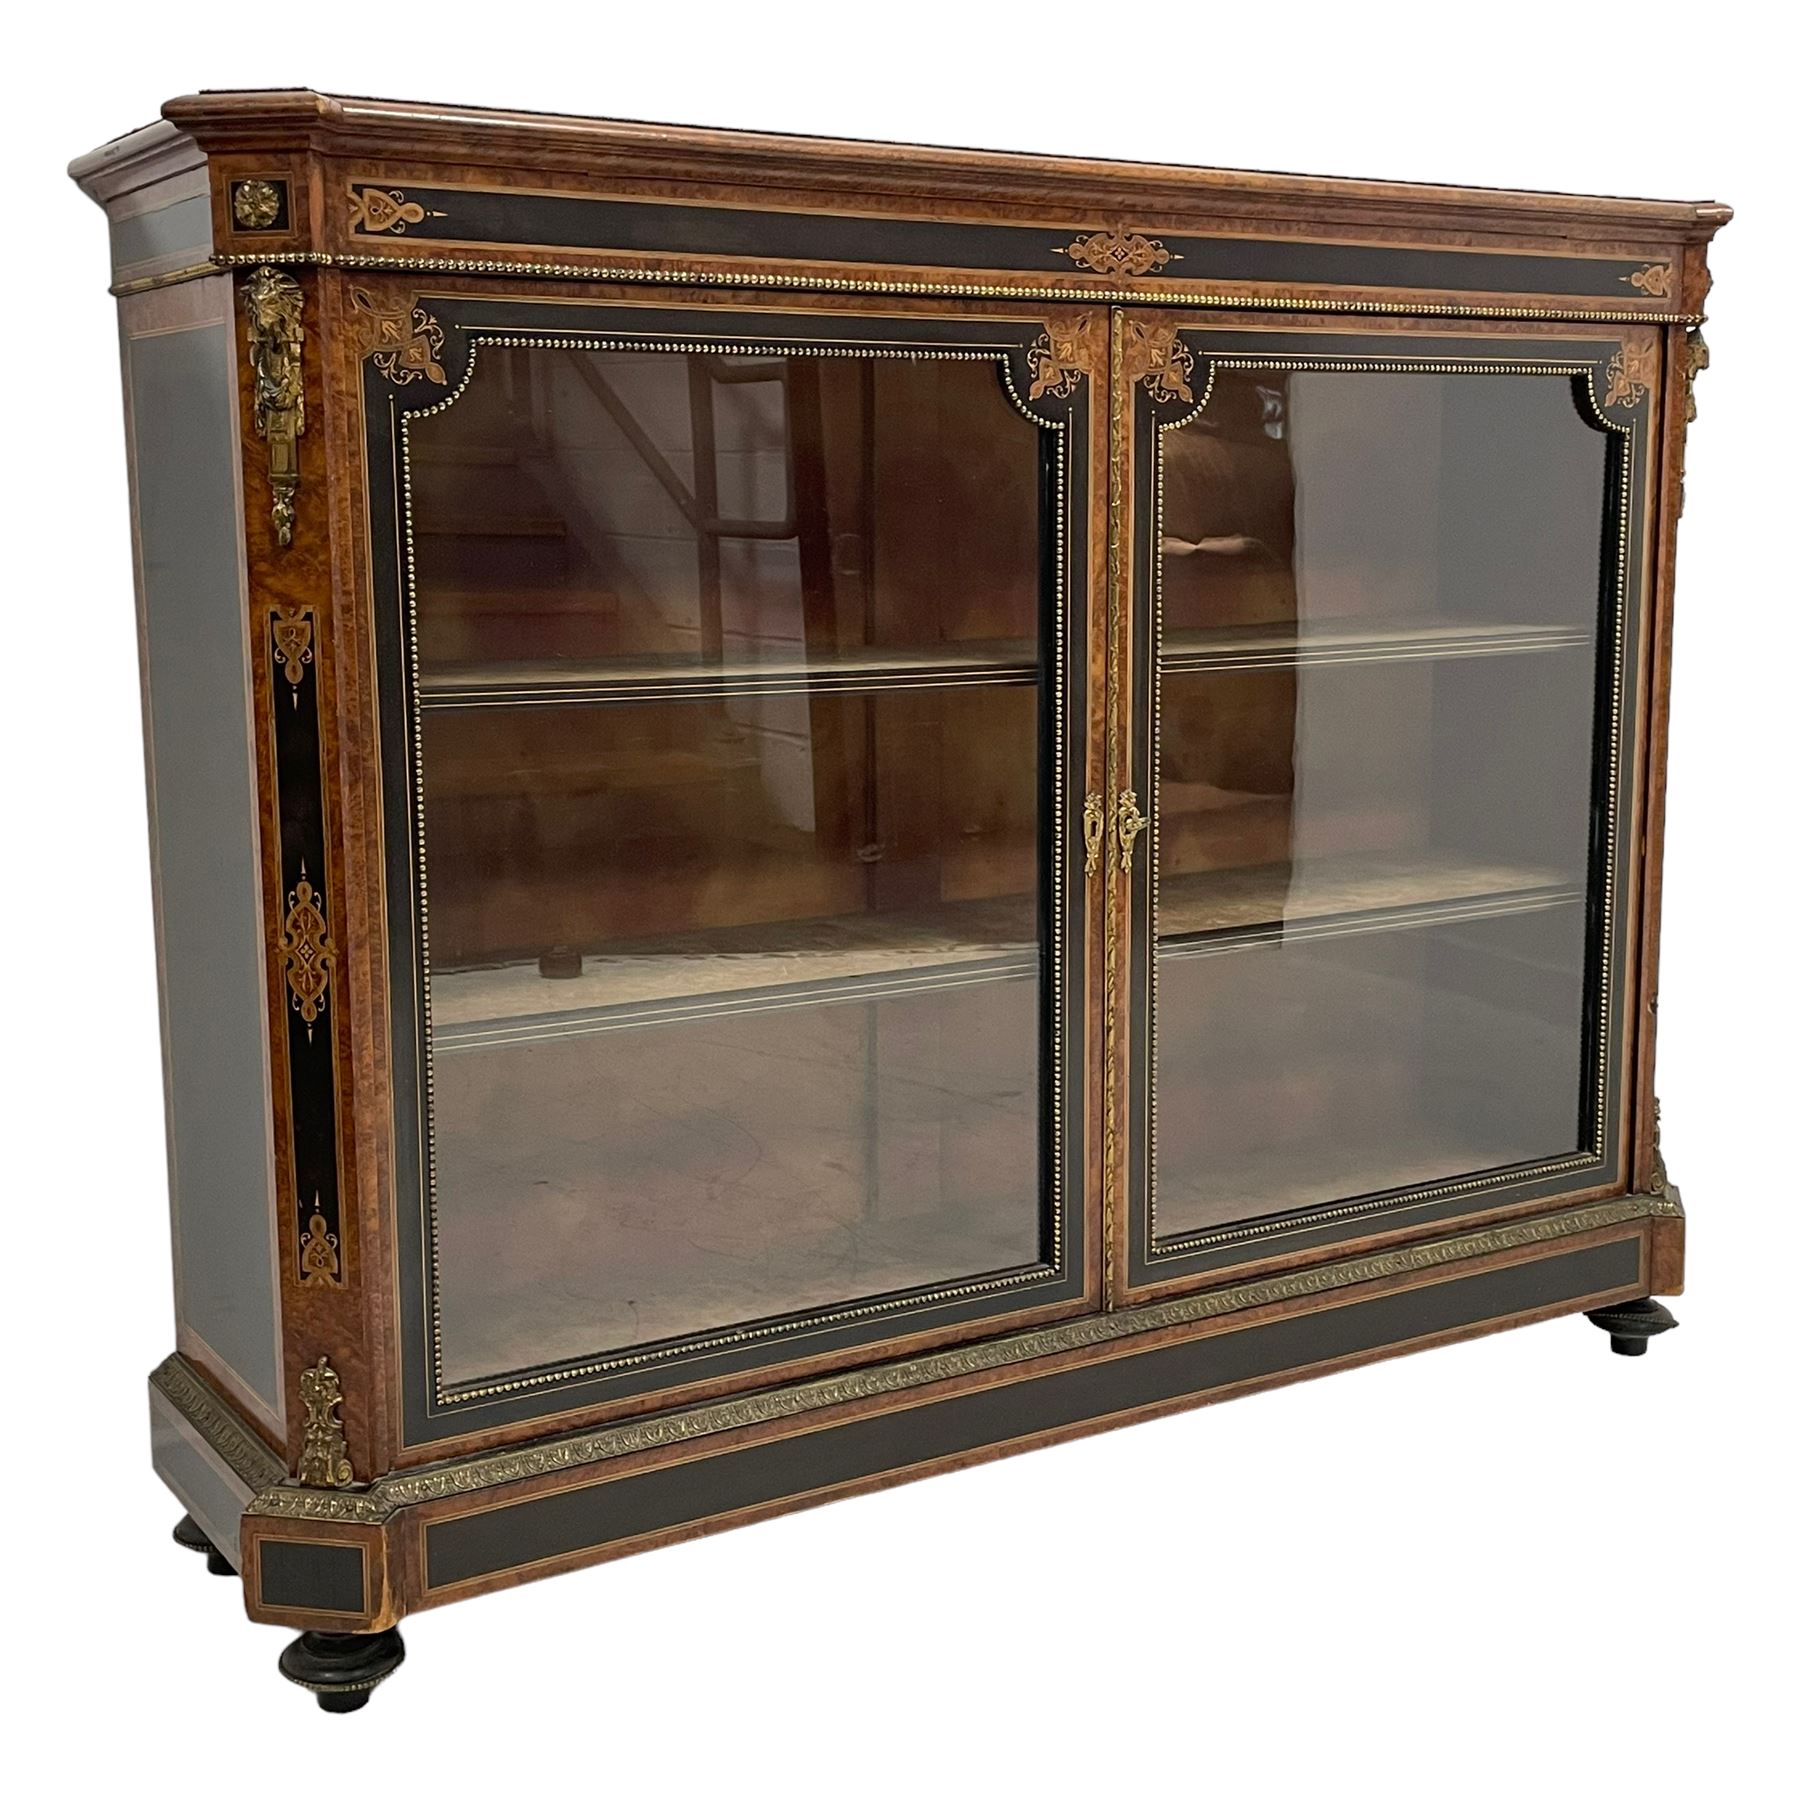 Victorian ebonised and amboyna wood credenza pier cabinet - Image 9 of 26